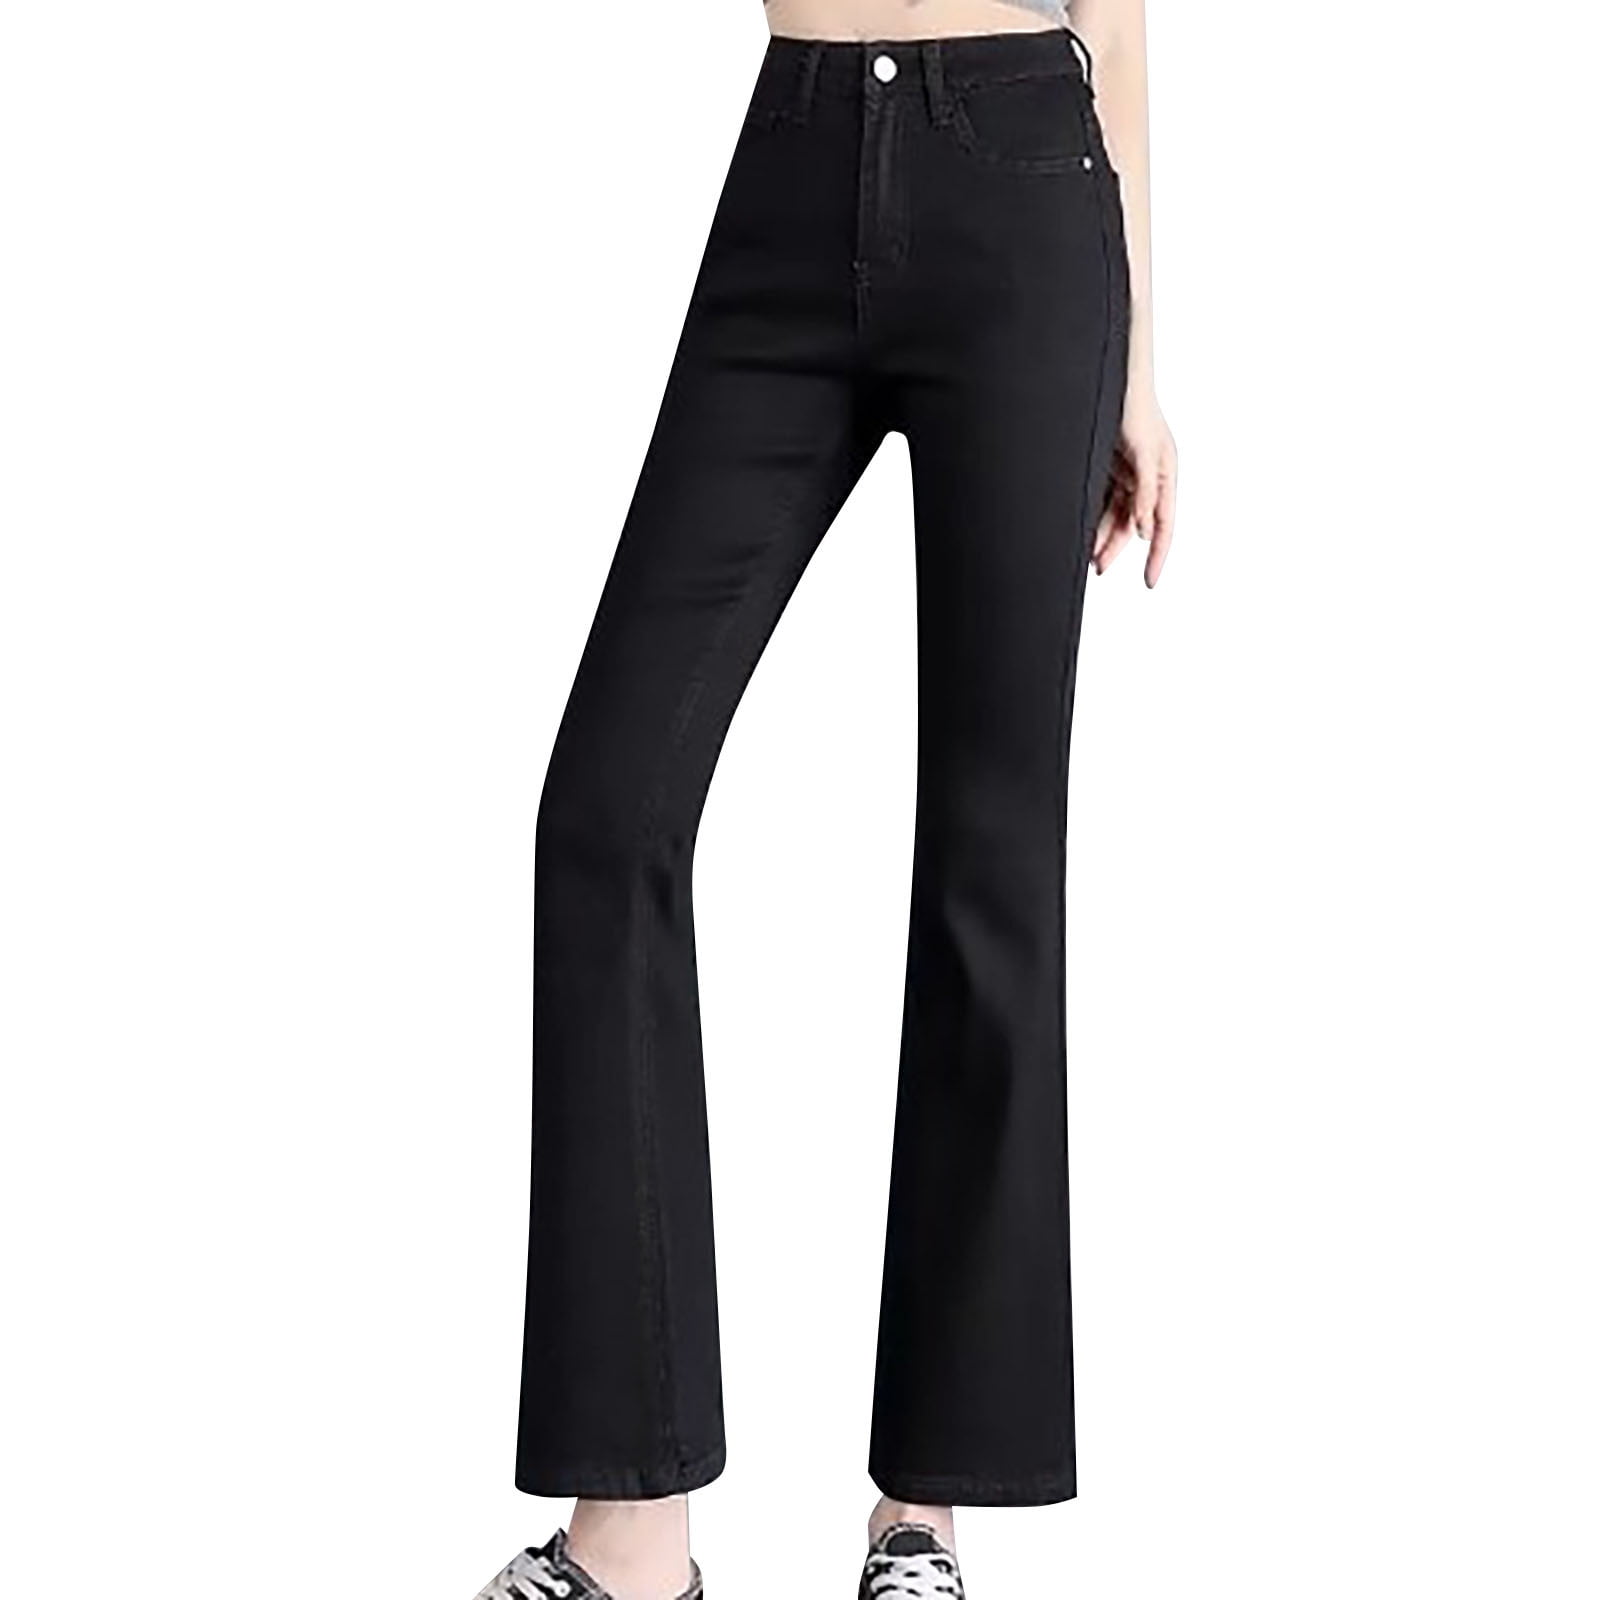 HAJGJP Elastic Waist Jeans for Women Micro Flared Pants Nine Point ...